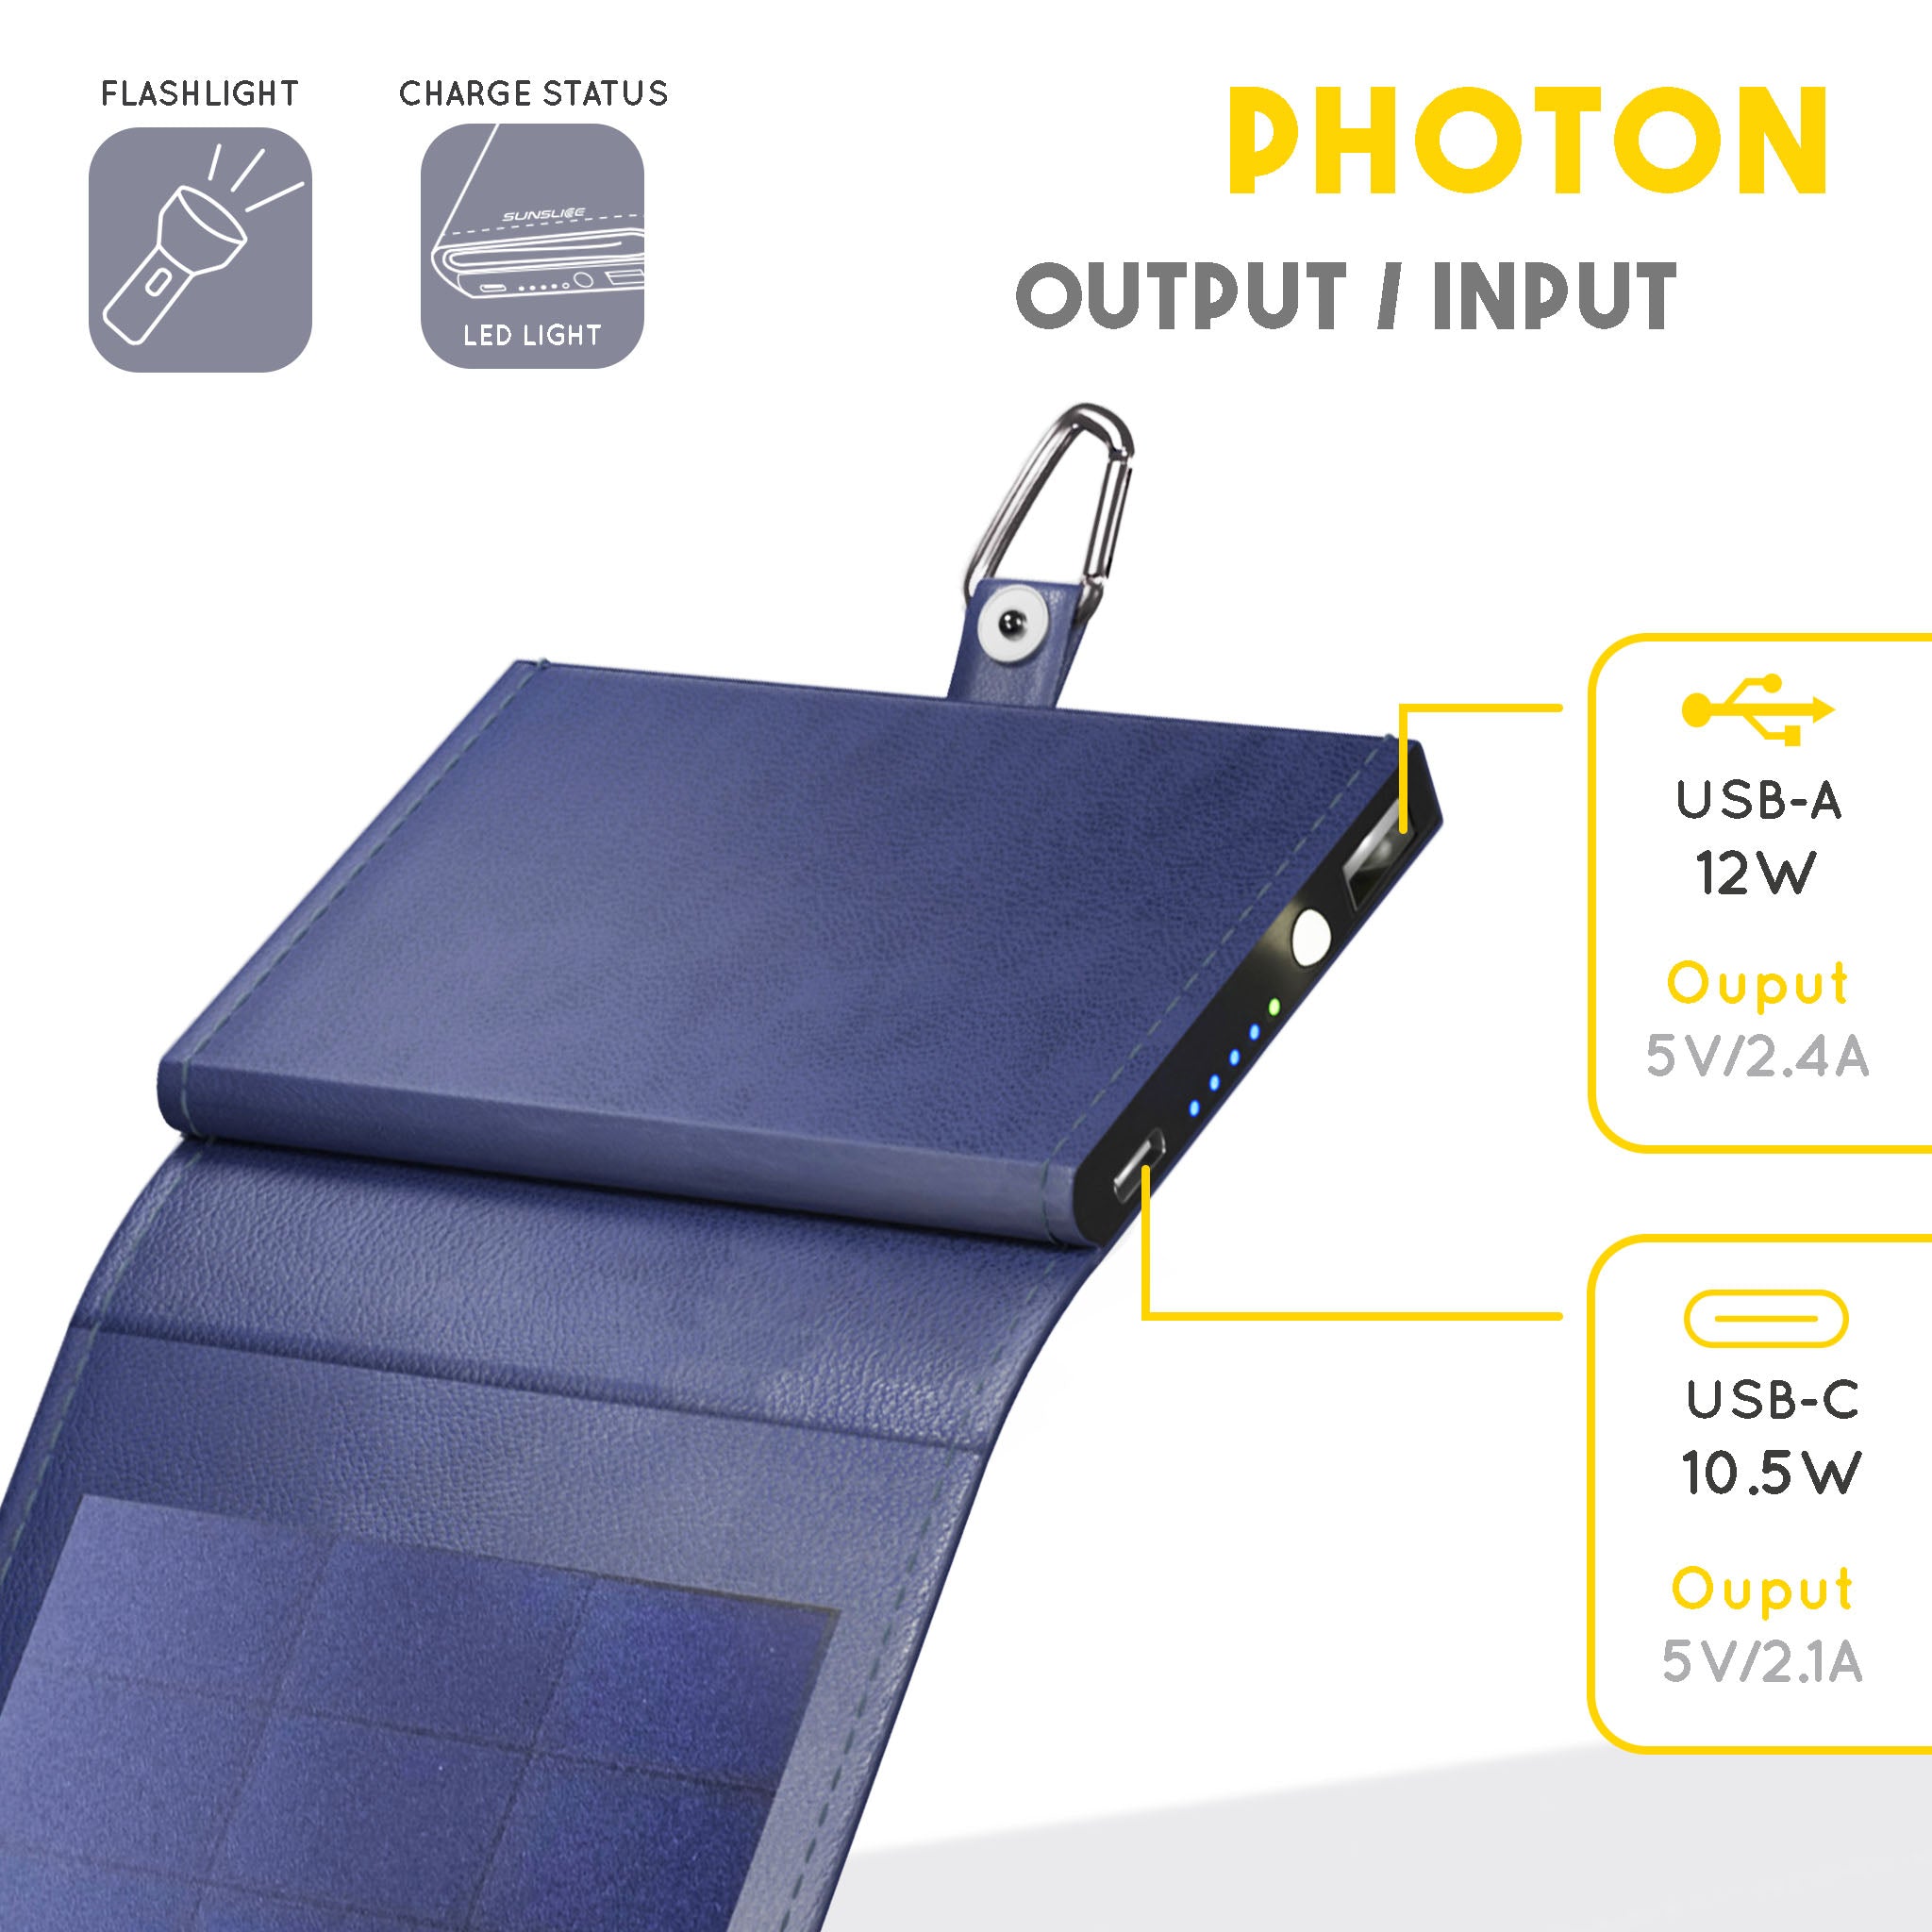 technische daten des Photon das beste solar-handy-ladegerät. leistung: USB-A 12W, USB-C 10,5W